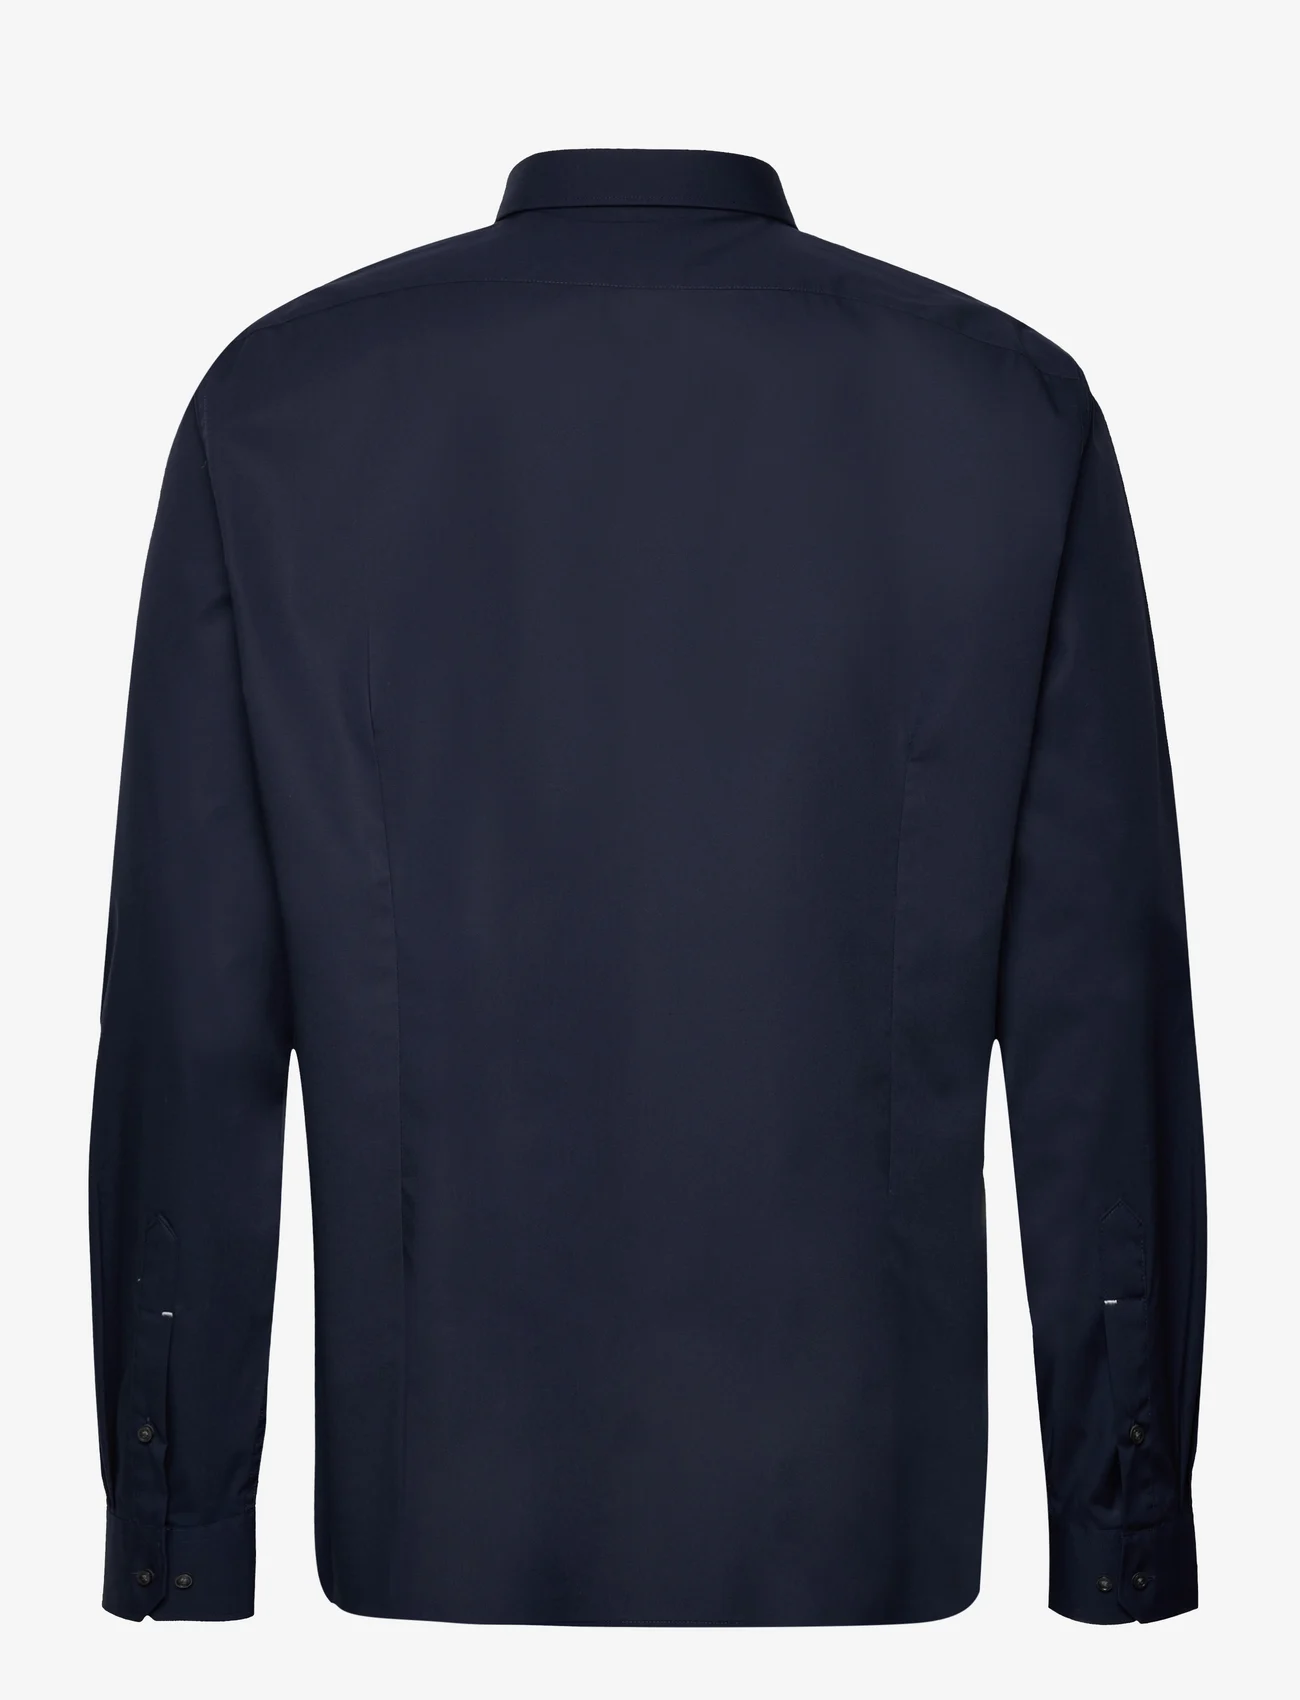 Michael Kors - POPLIN STRETCH SLIM SHIRT - basic overhemden - midnight blue - 1